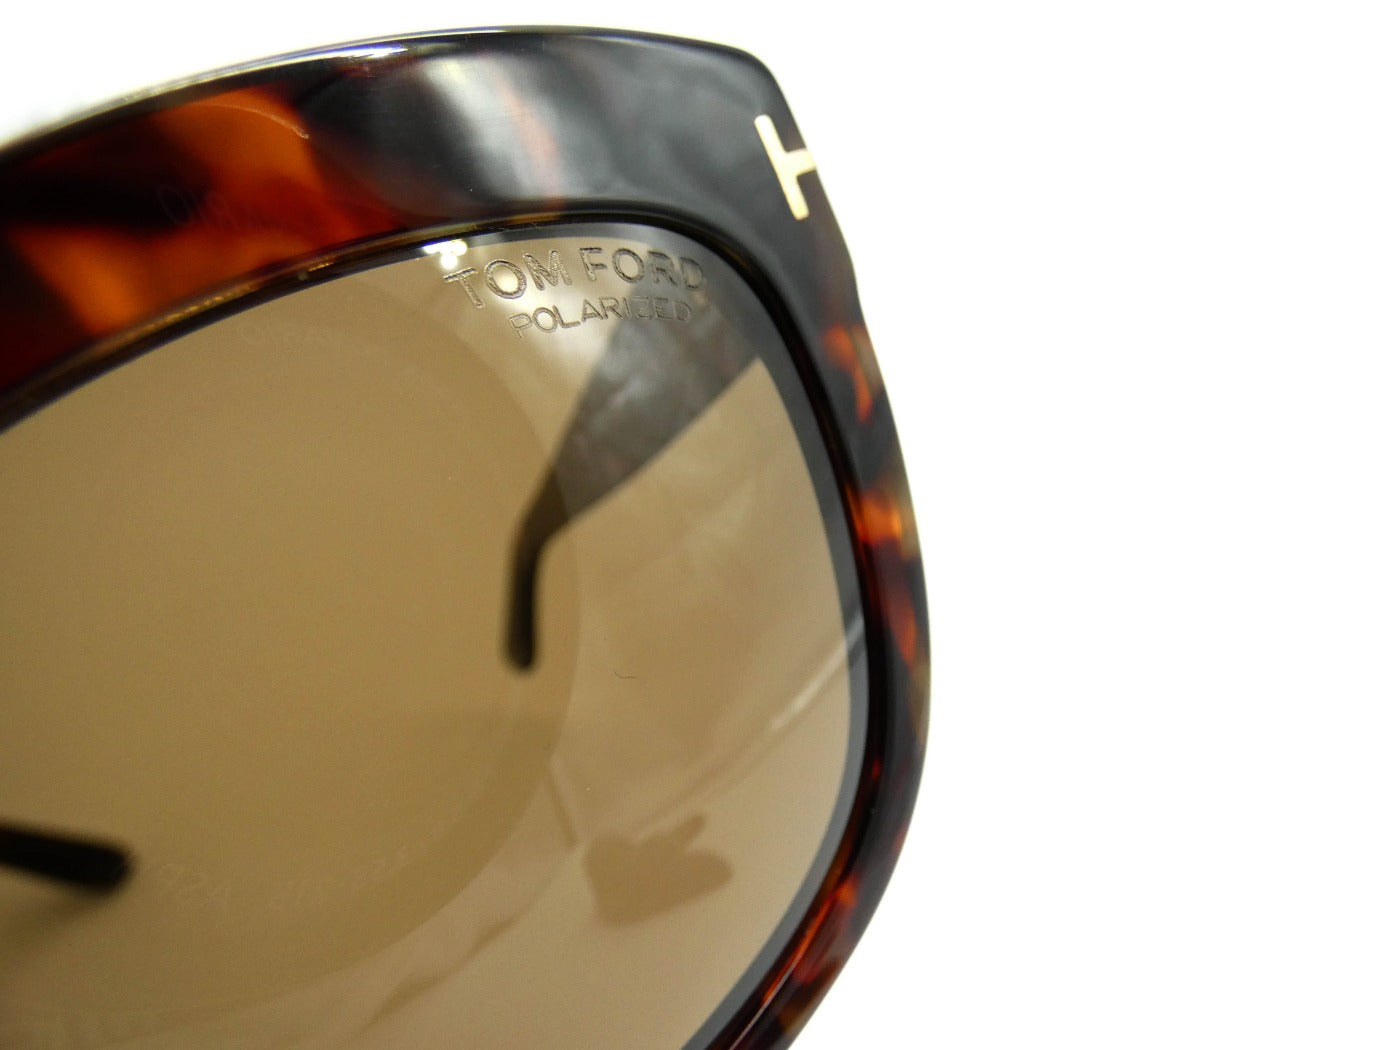 Tom Ford Alistair Polarized Sunglasses TF524 Sunglasses Tom Ford